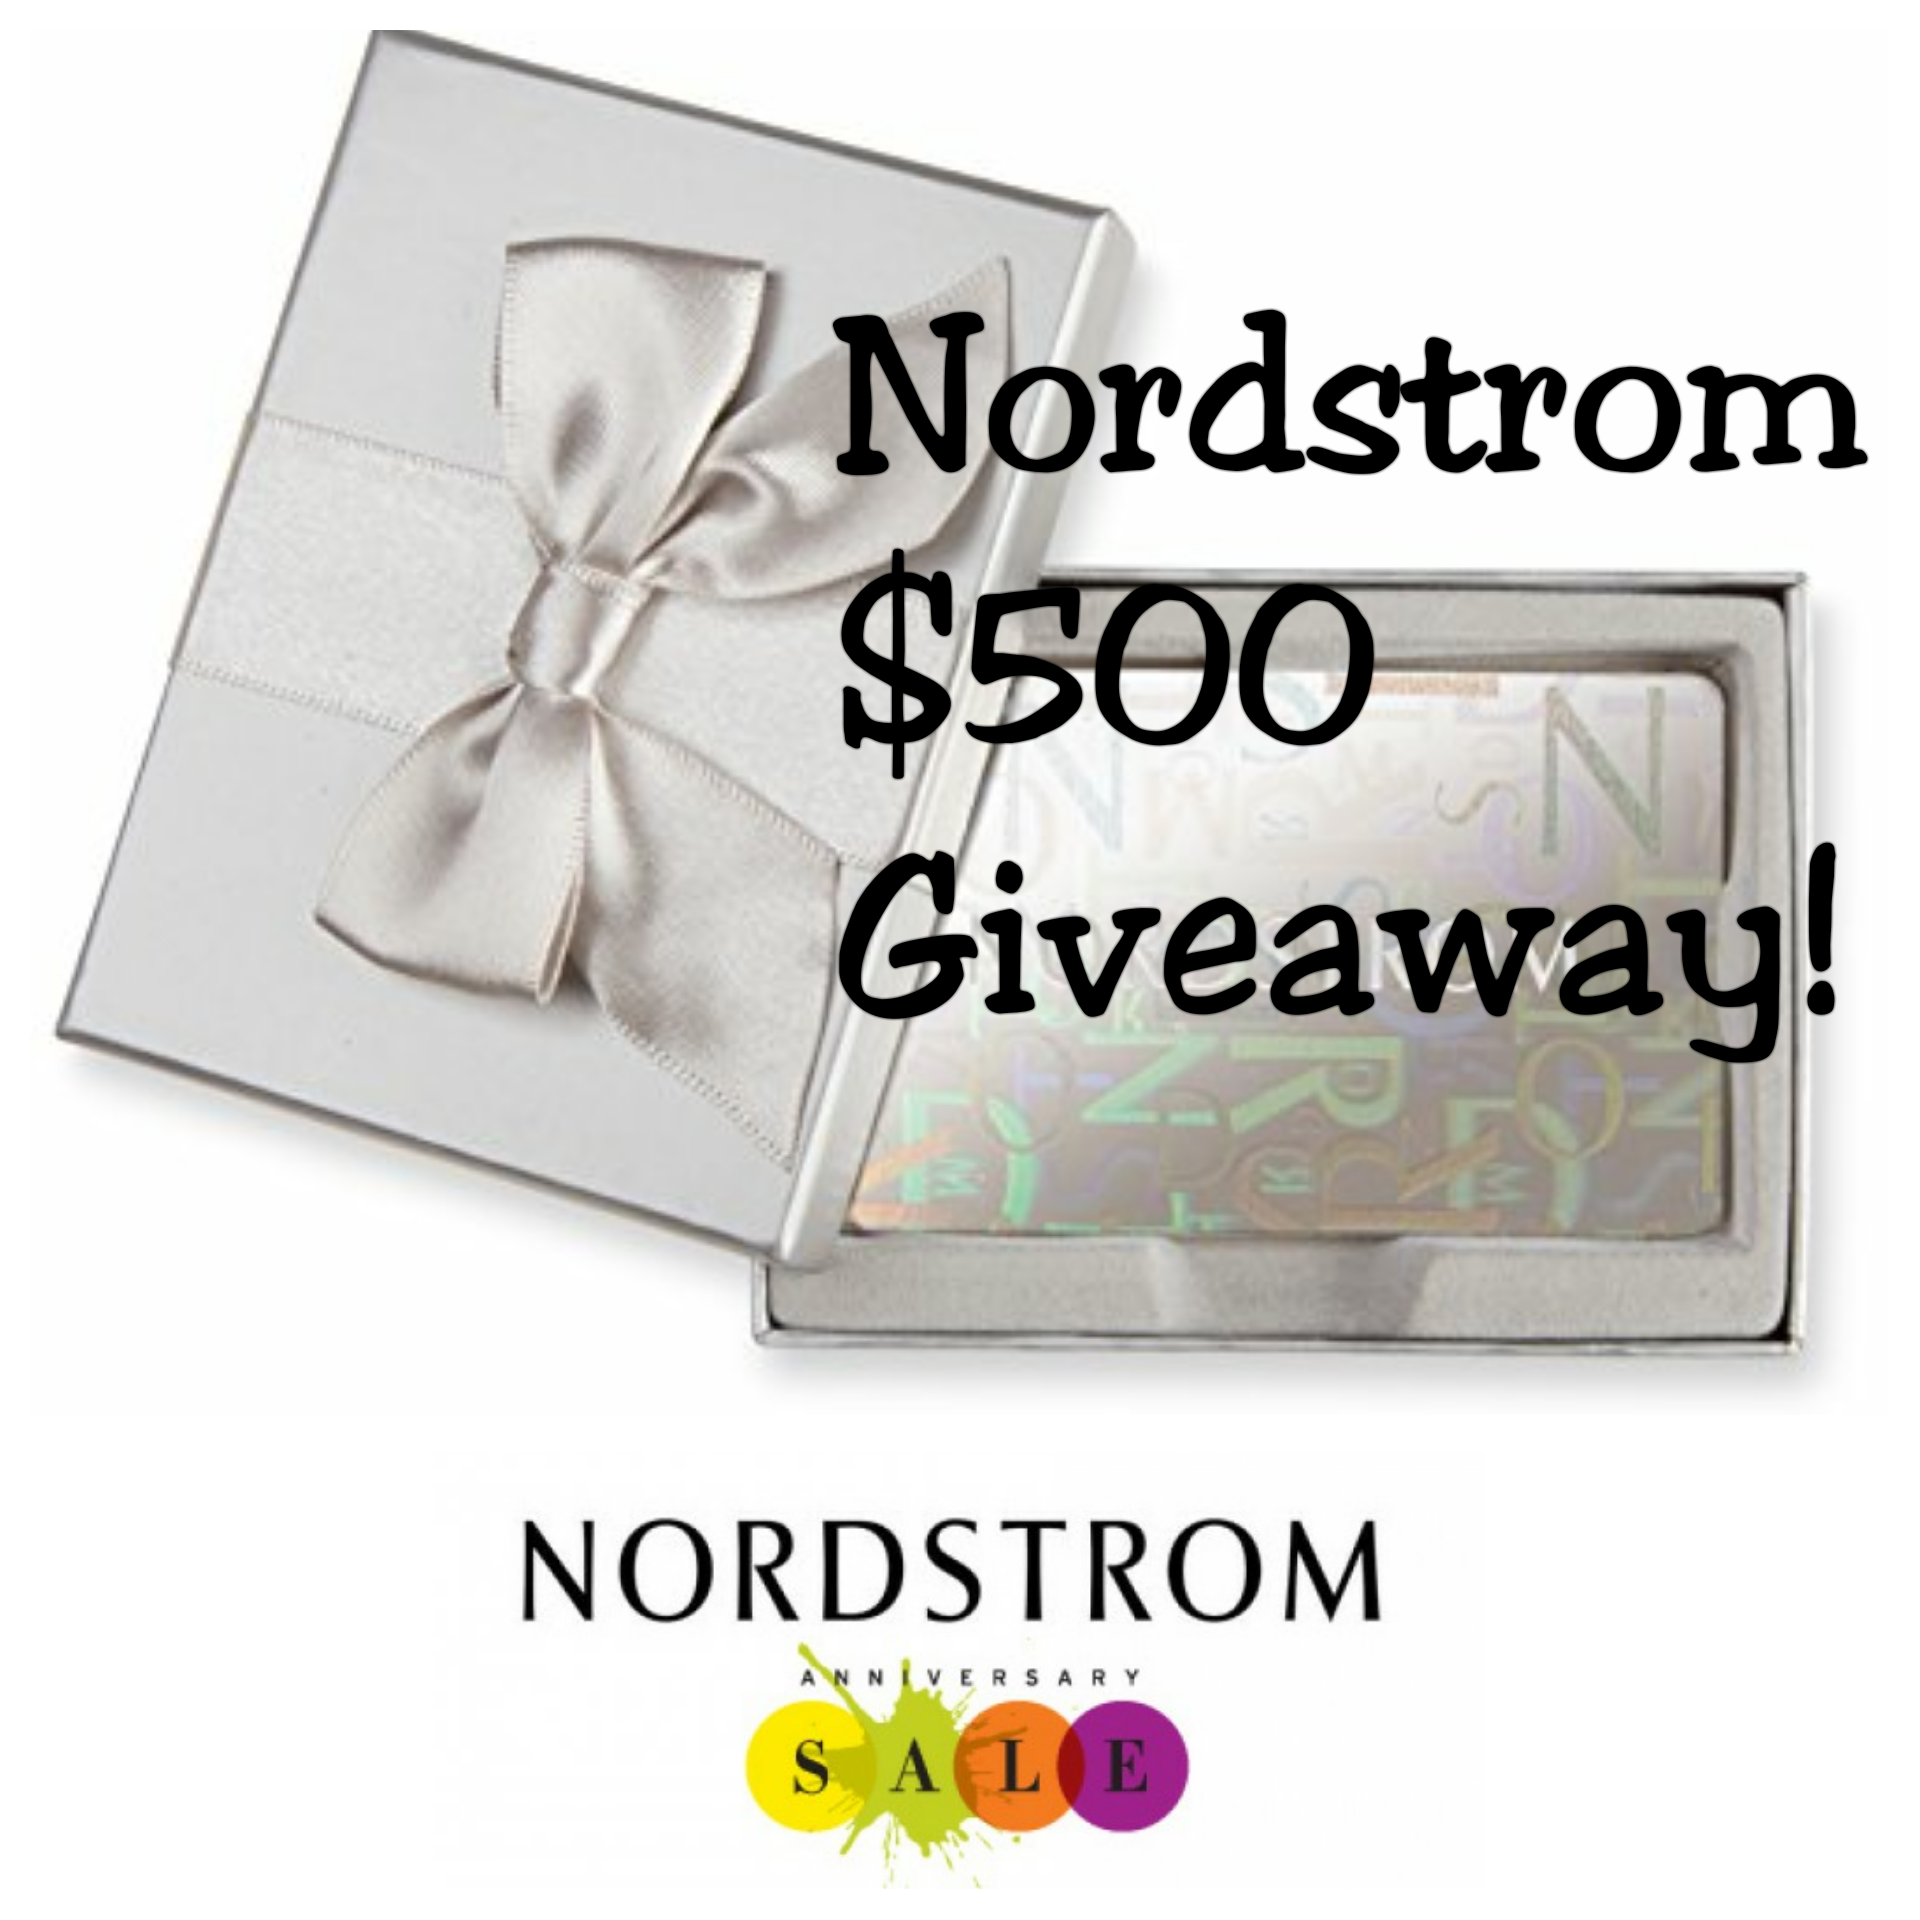 Preparing for the Nordstrom #NSALE + $500 Giveaway | LOVE 'N' LABELS WWW.LOVENLABELS.COM